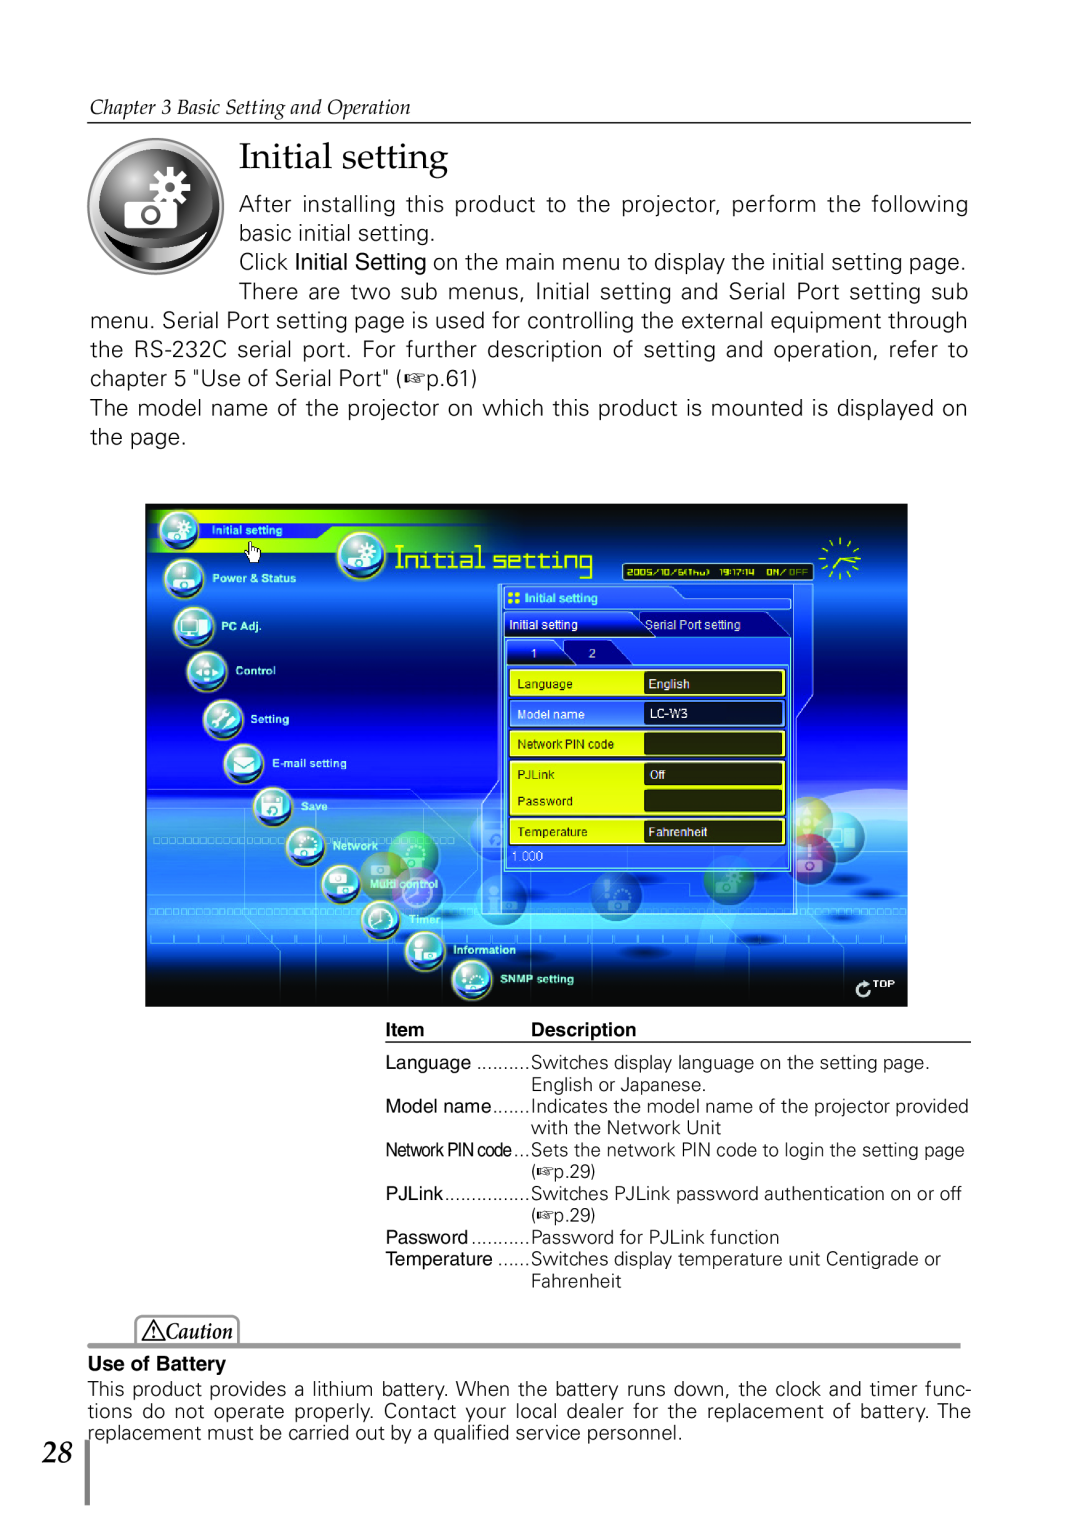 Eiki PJNET-300 owner manual Initial setting, Use of Battery 